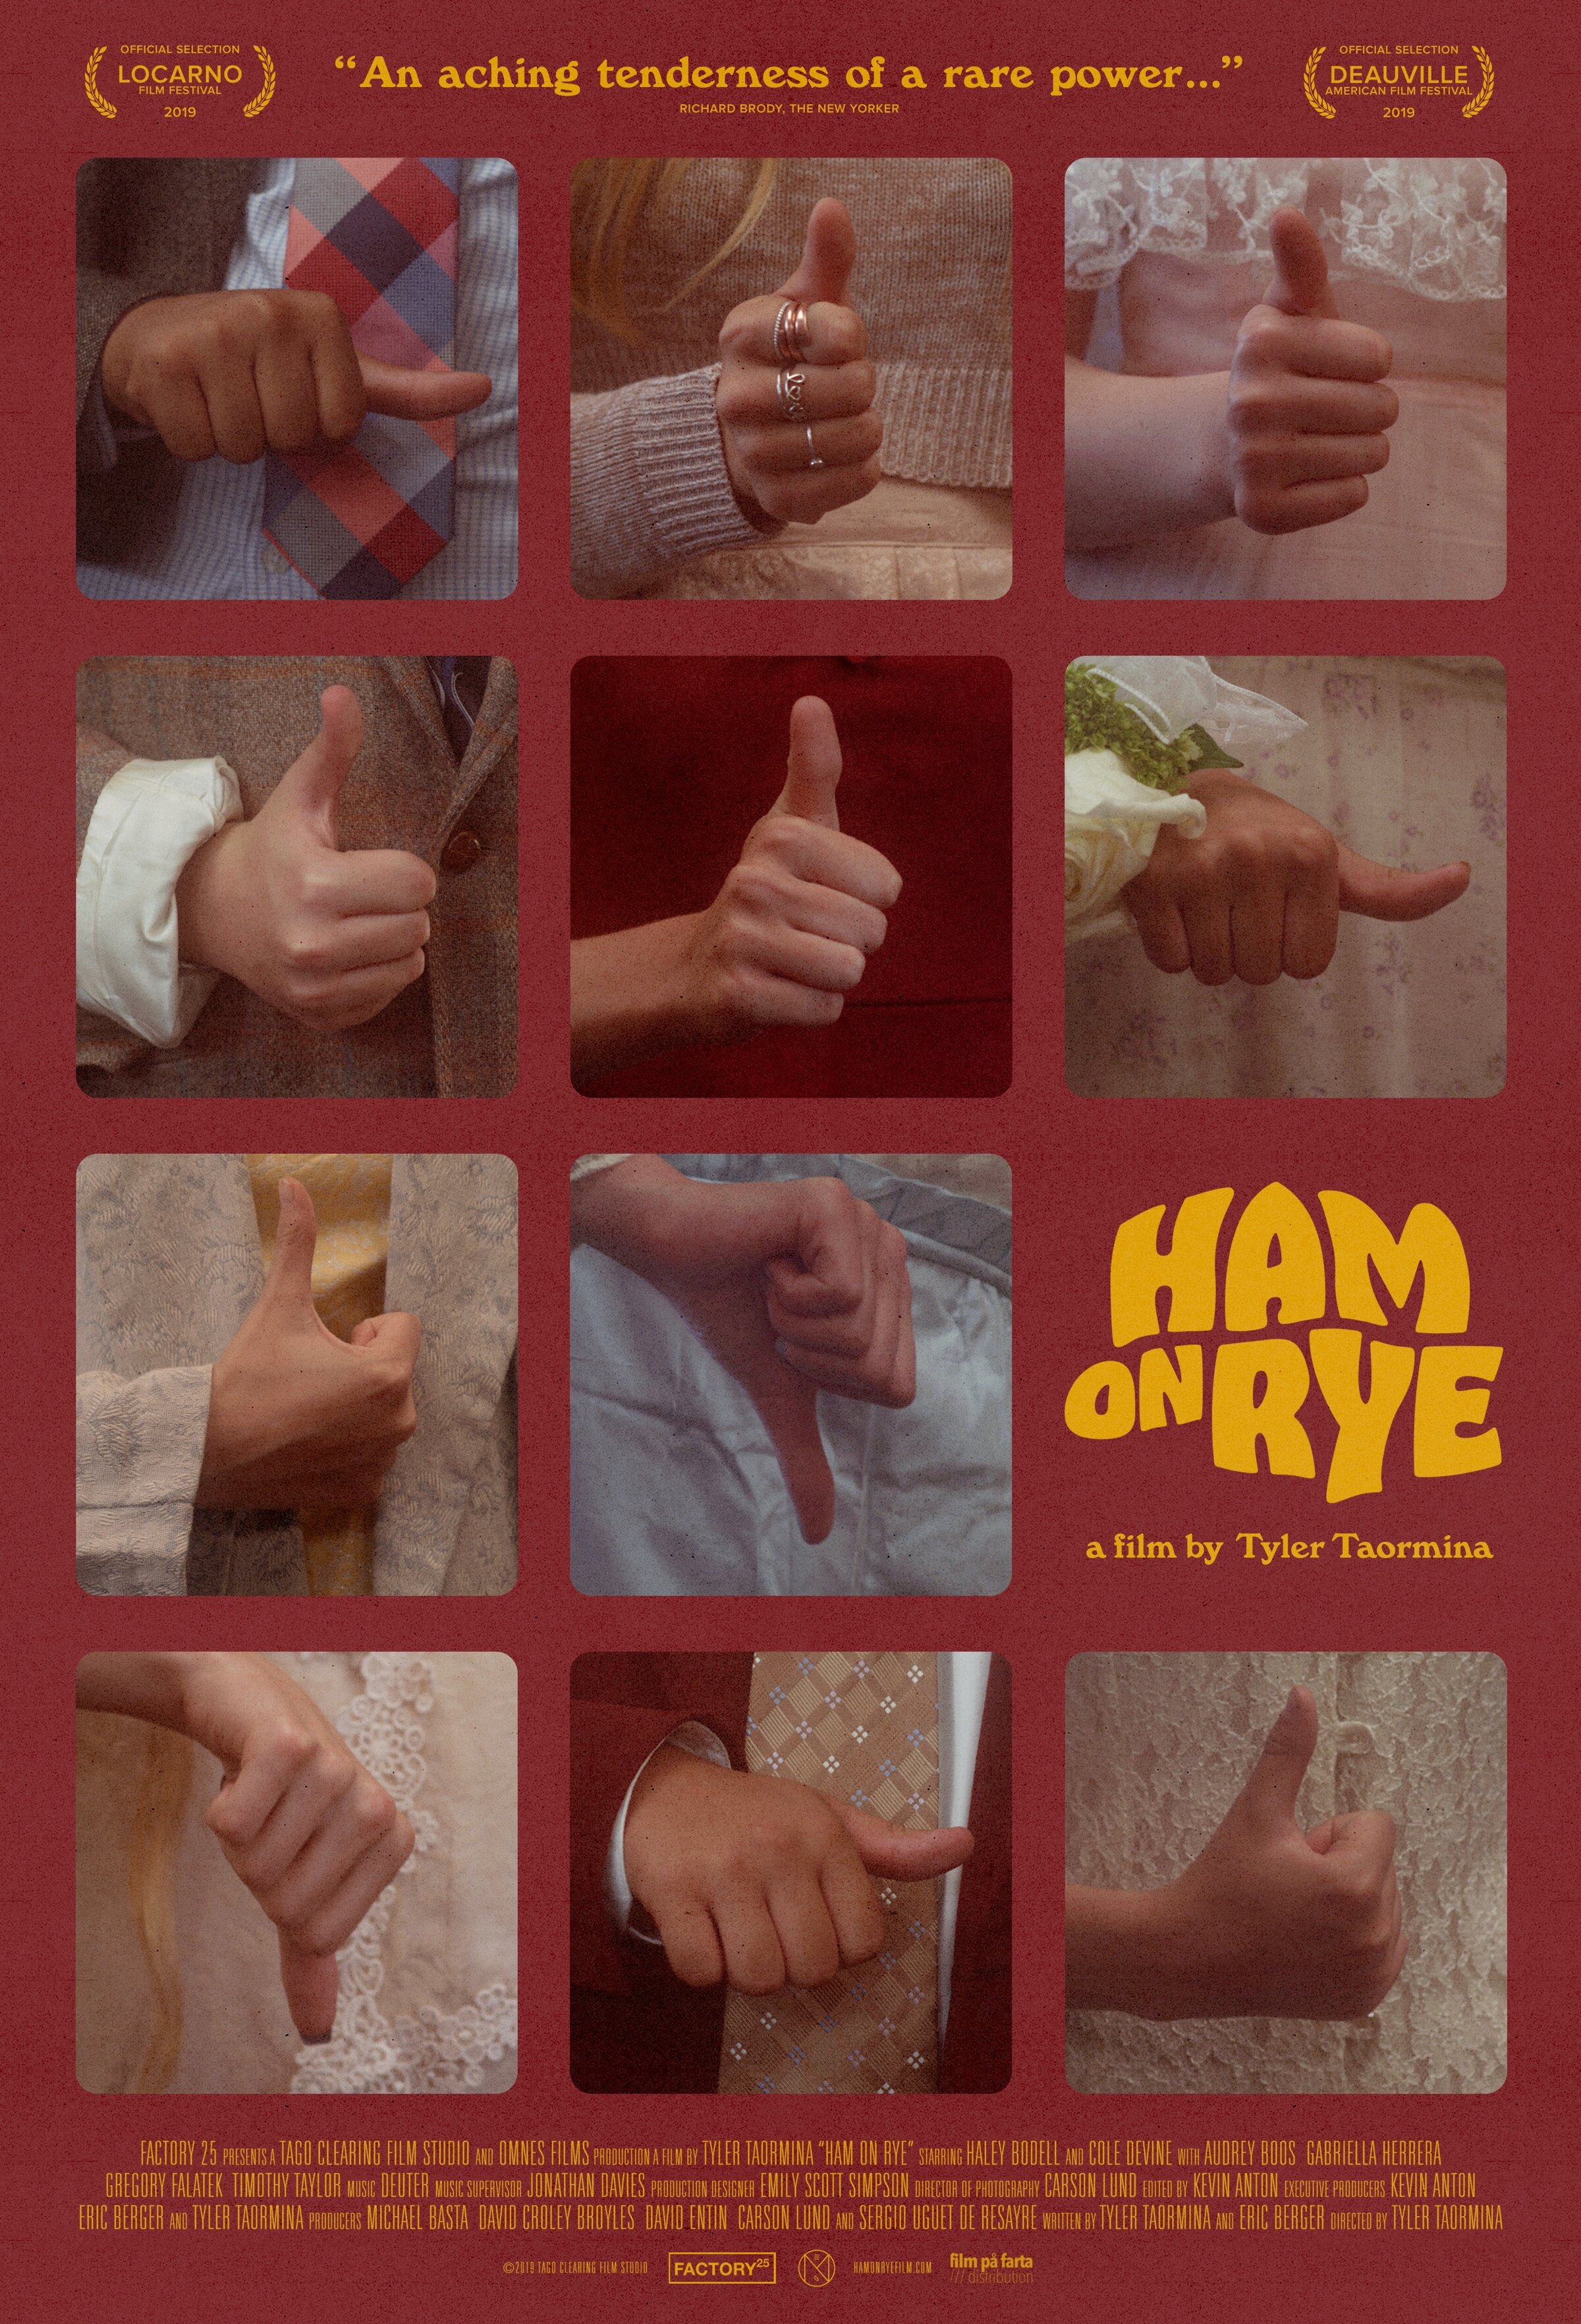 HAM ON RYE | USA 2019 | 85 min | Comedy / Drama